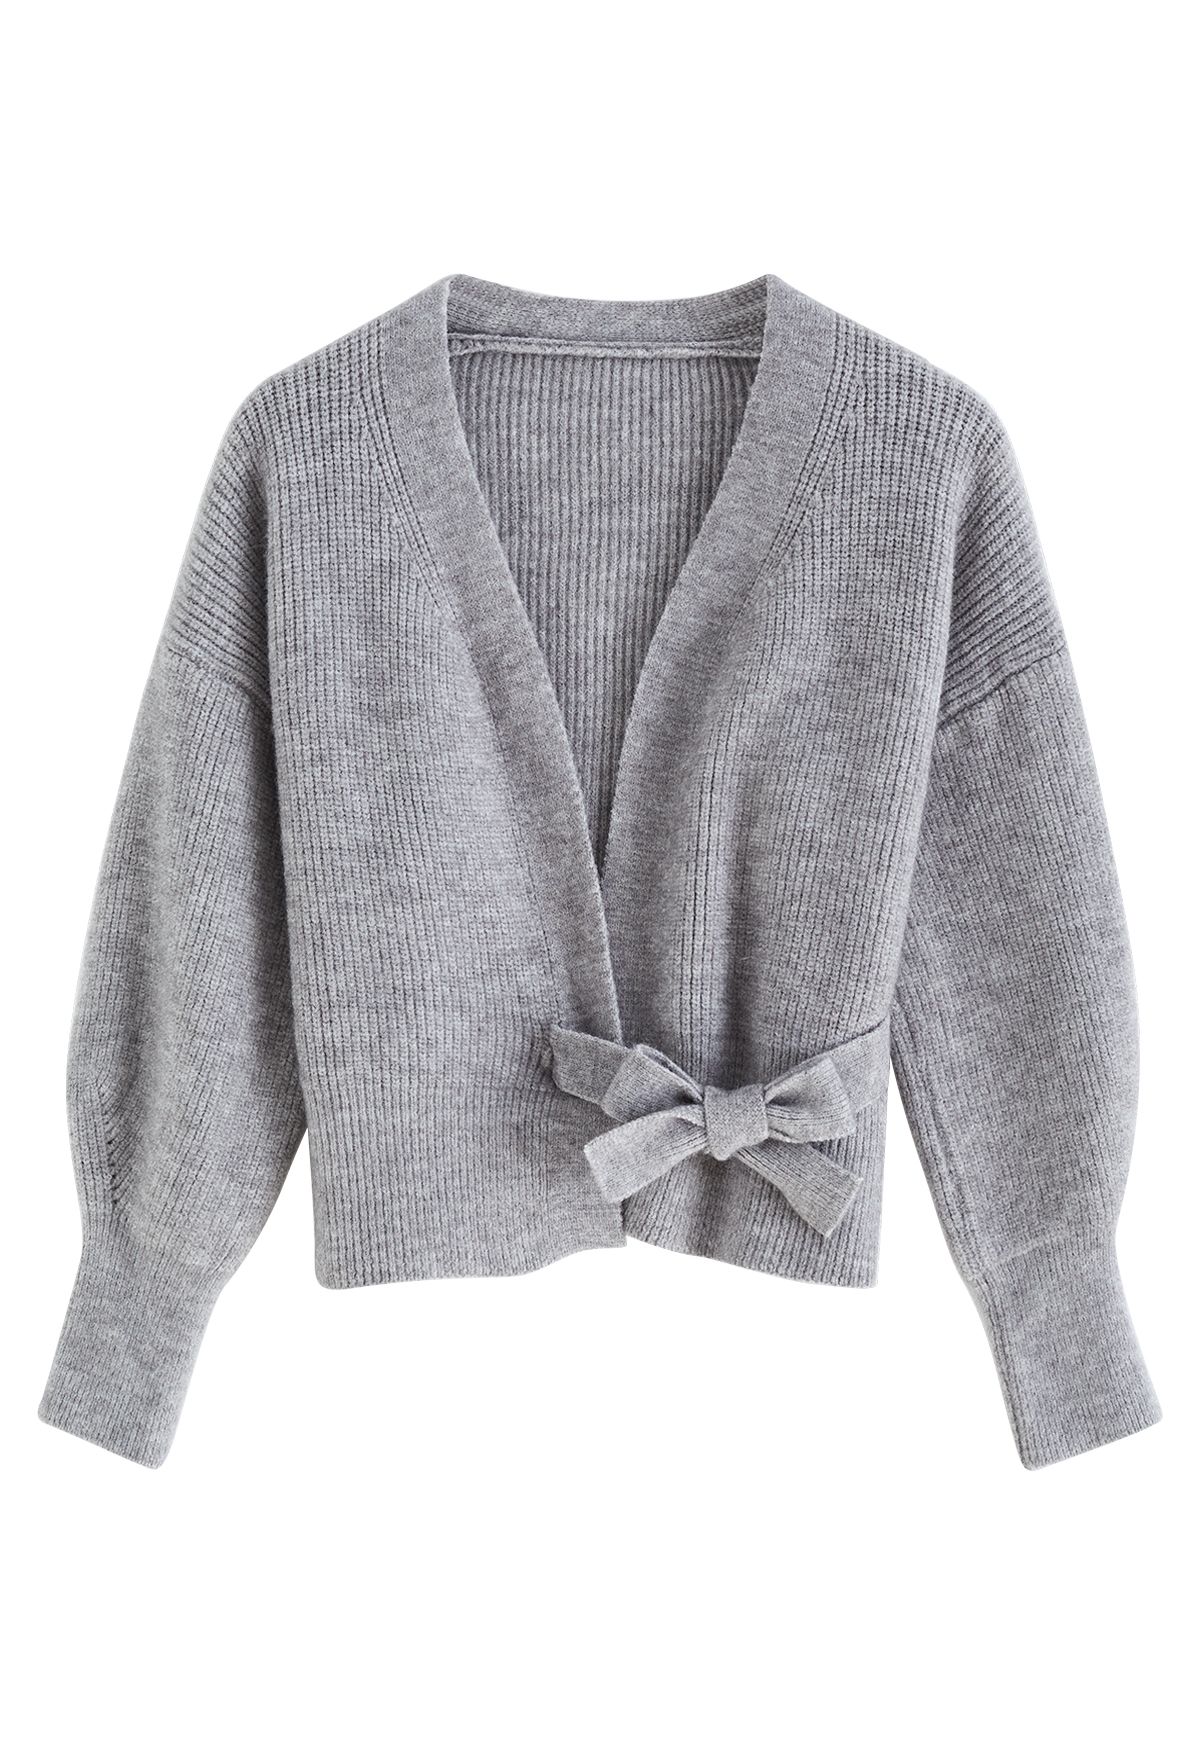 Self-Tie Bowknot Wrap Knit Top in Grey